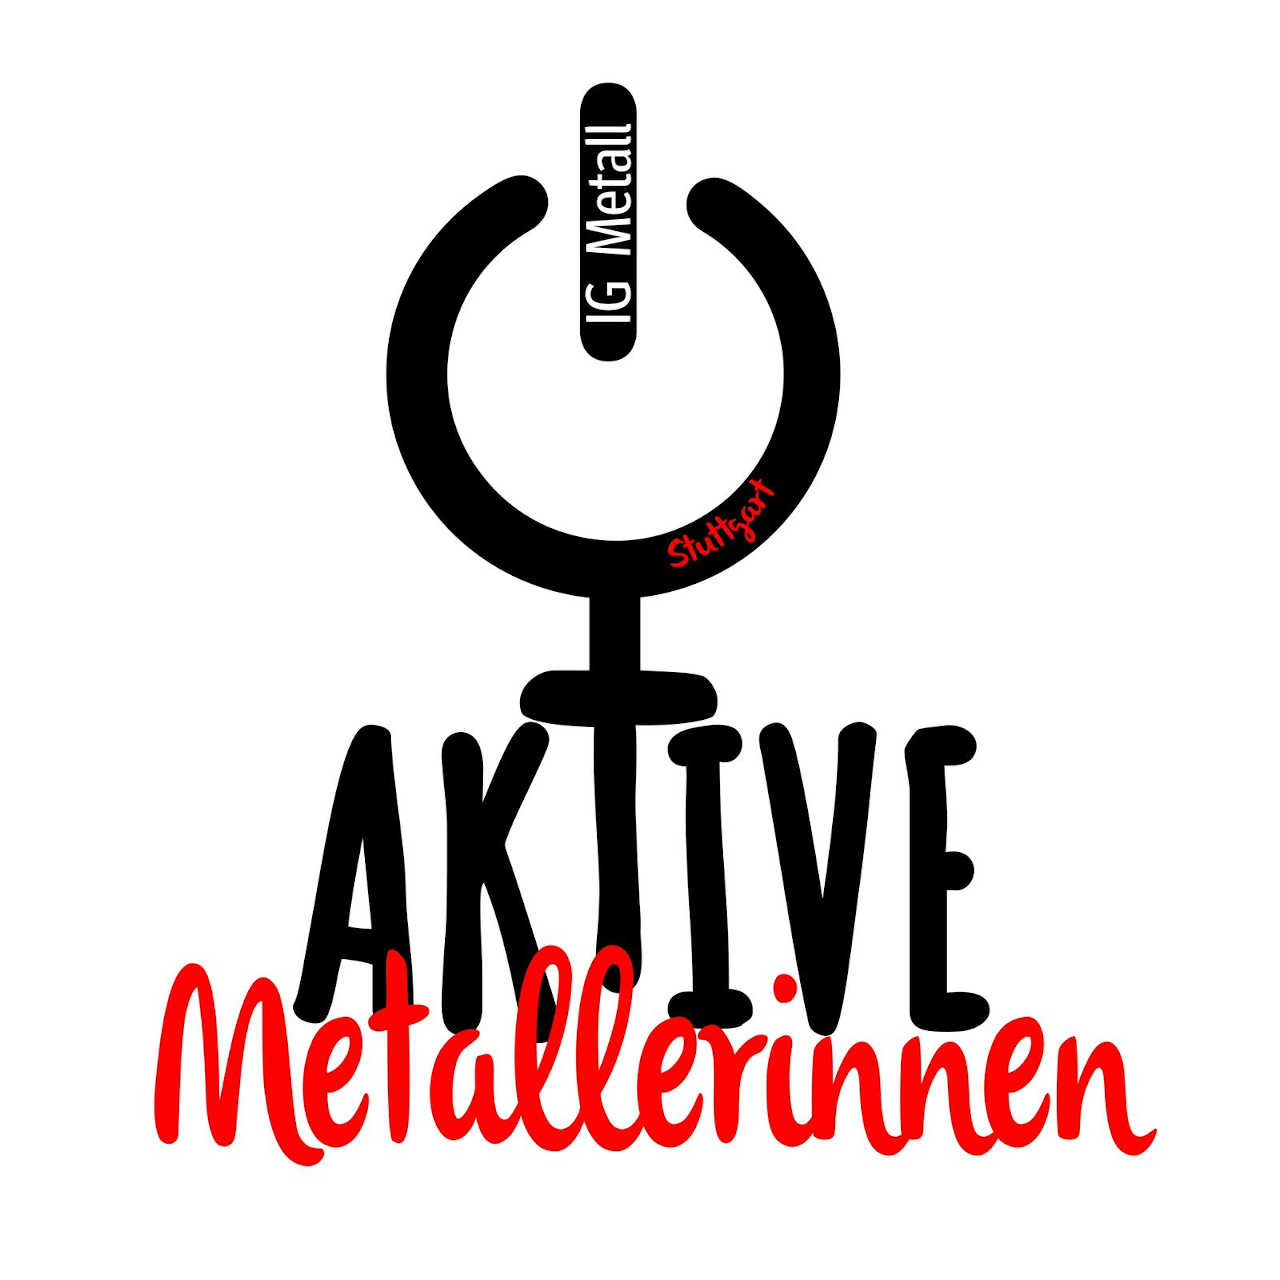 Aktive Metallerinnen (AM) der IG Metall Stuttgart